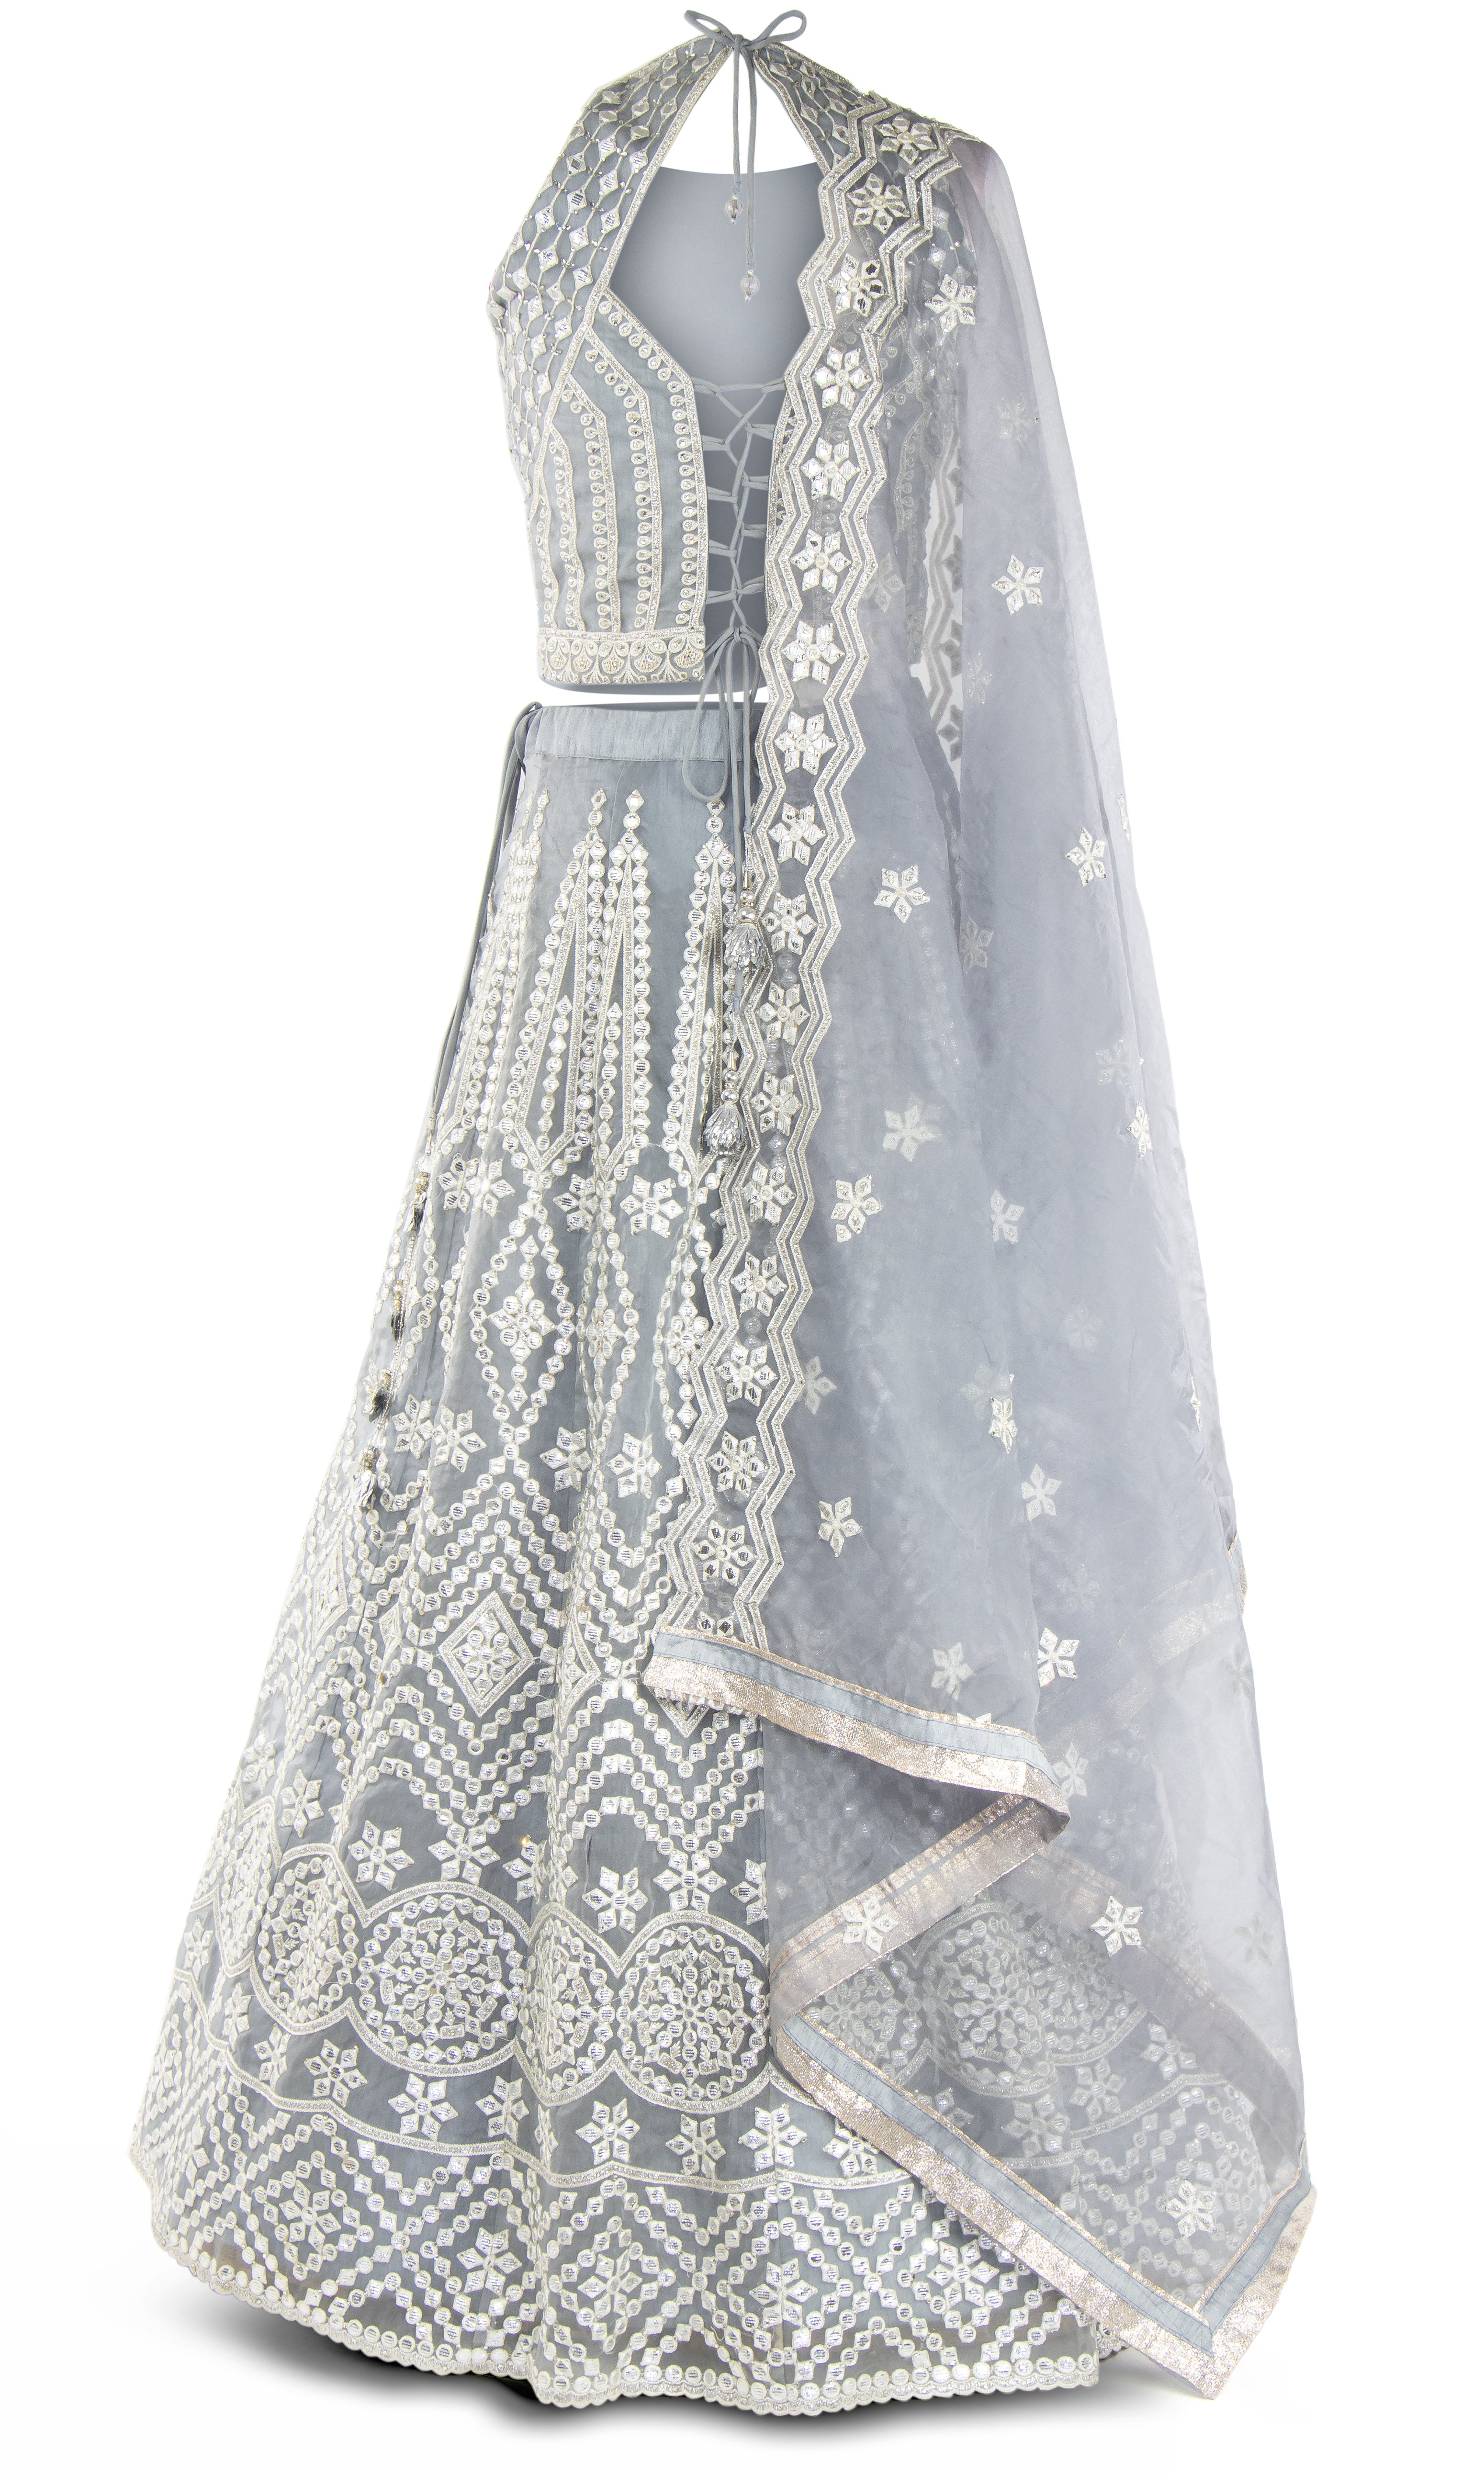 A sleeveless gray lehenga is embellished in a diamond pattern mirror fabric.